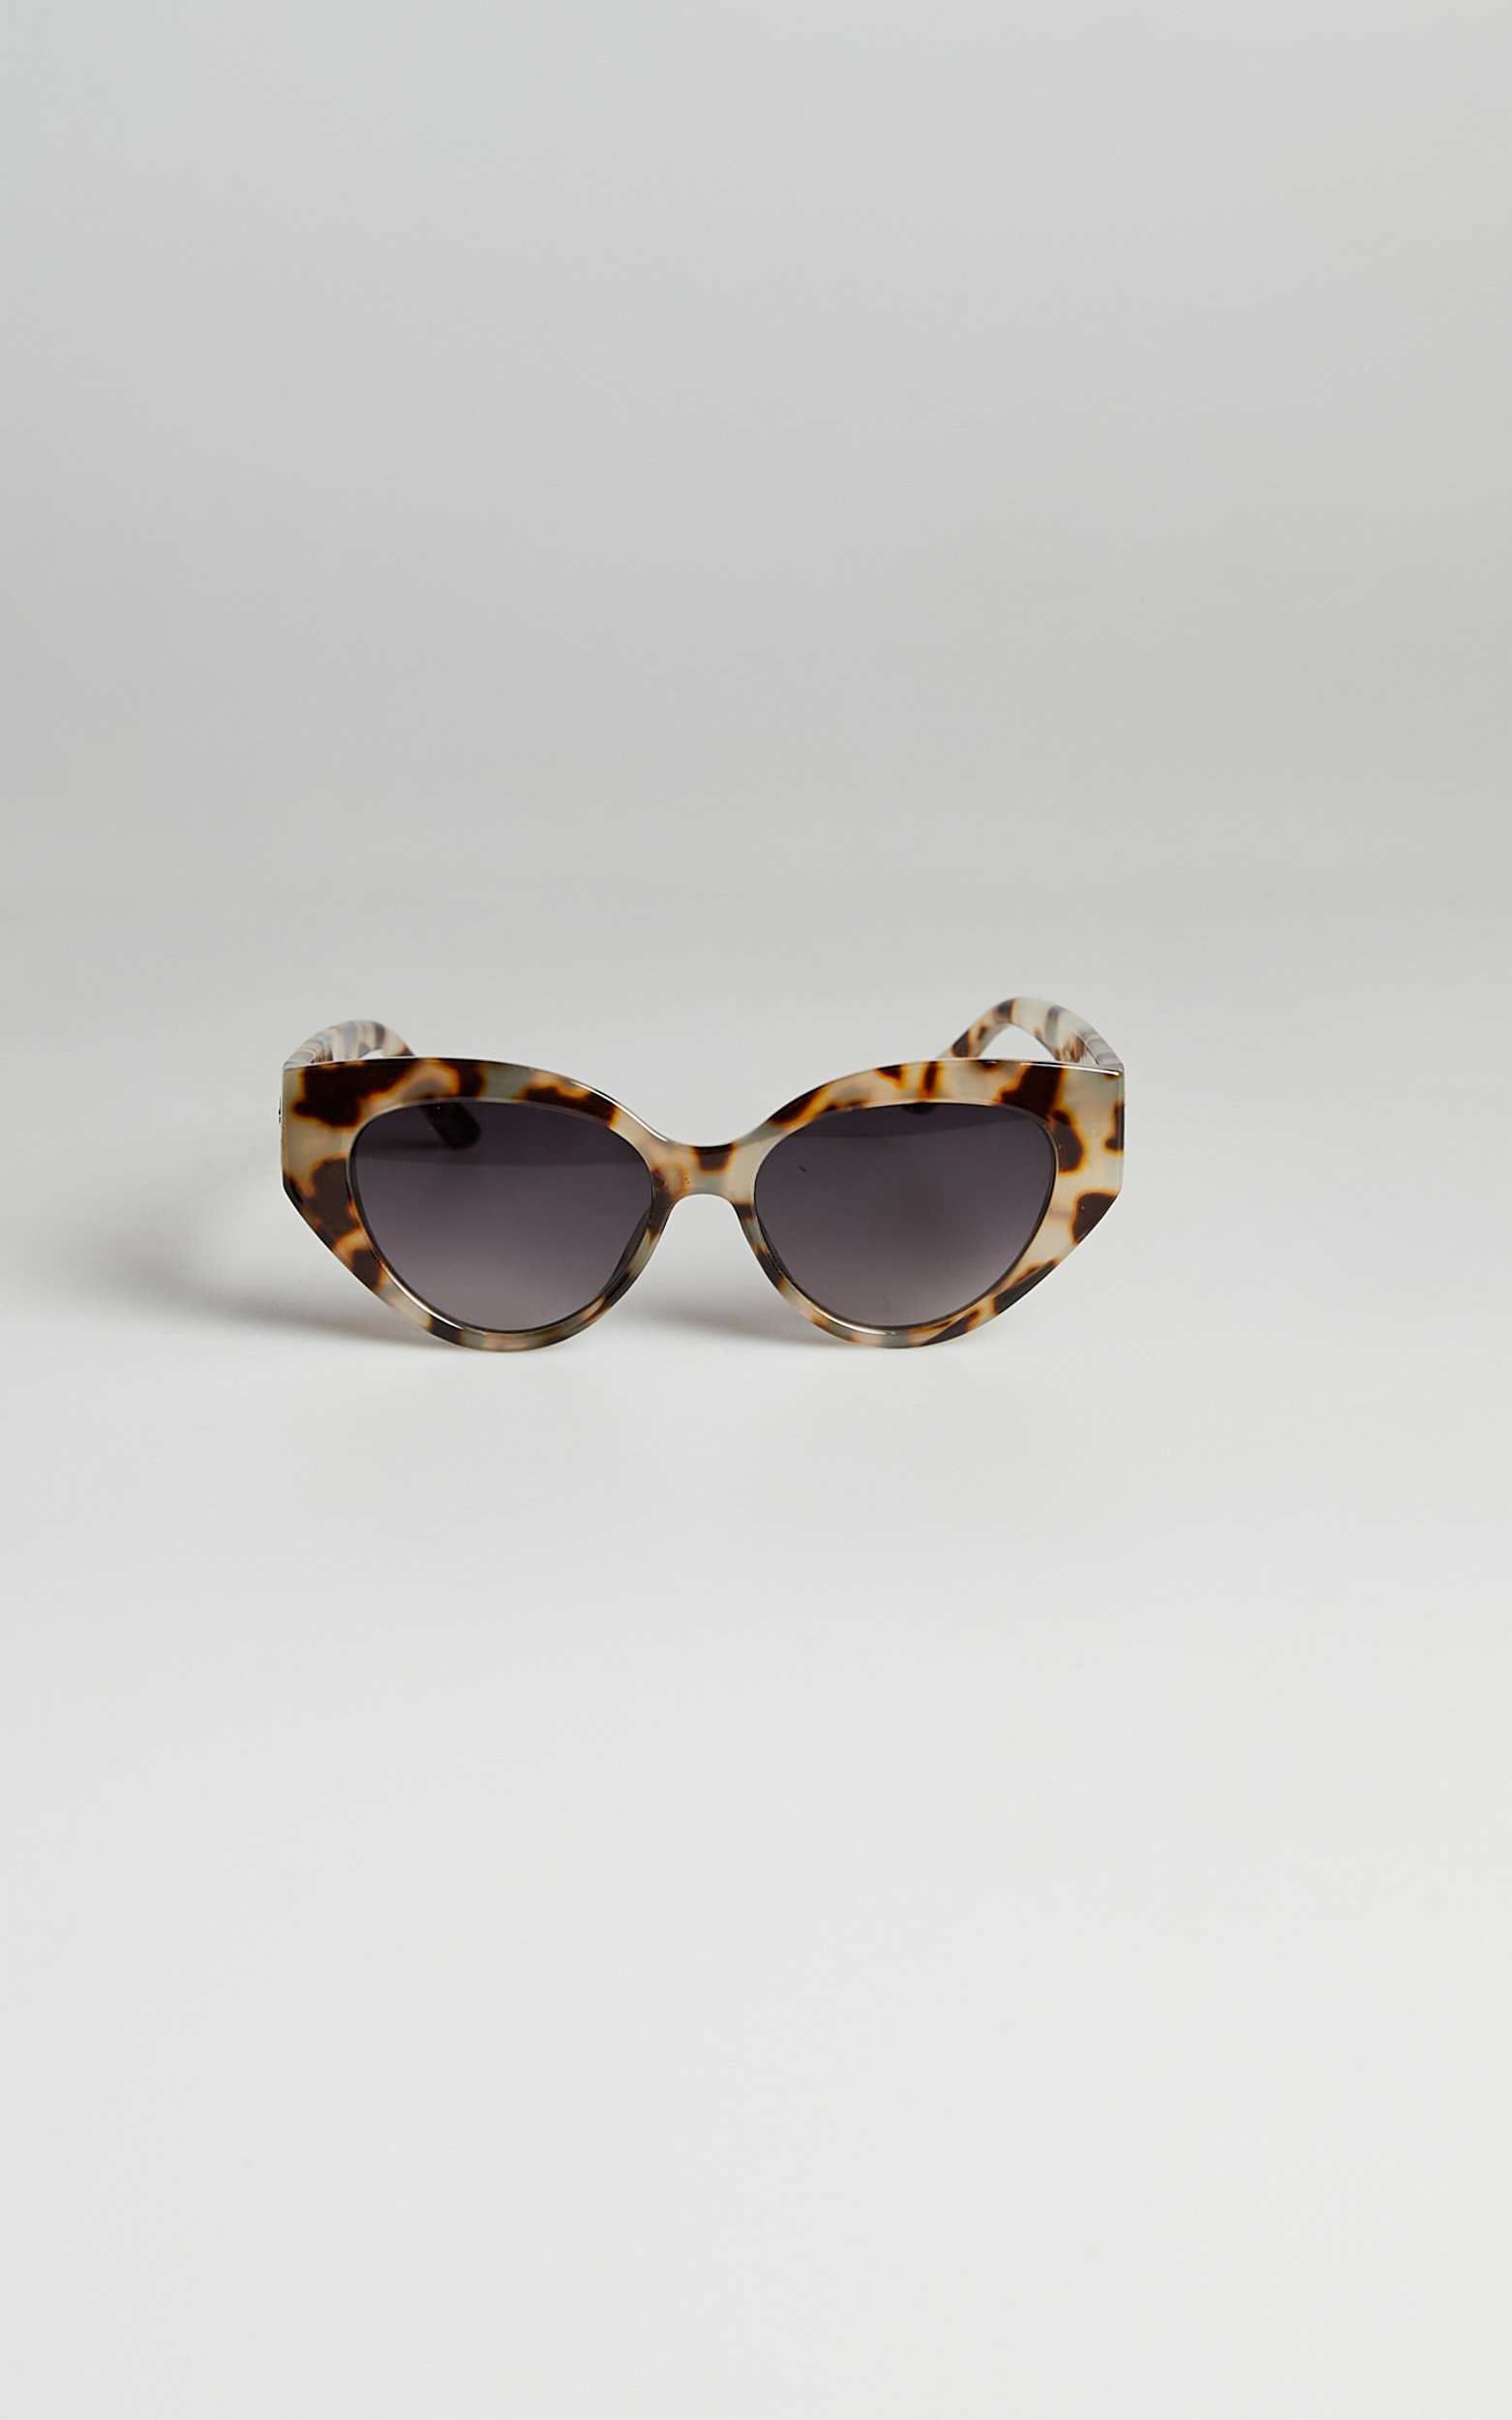 Peta and Jain - Libertine Sunglasses in Milky Tort/Black Fade - NoSize, NEU1, hi-res image number null